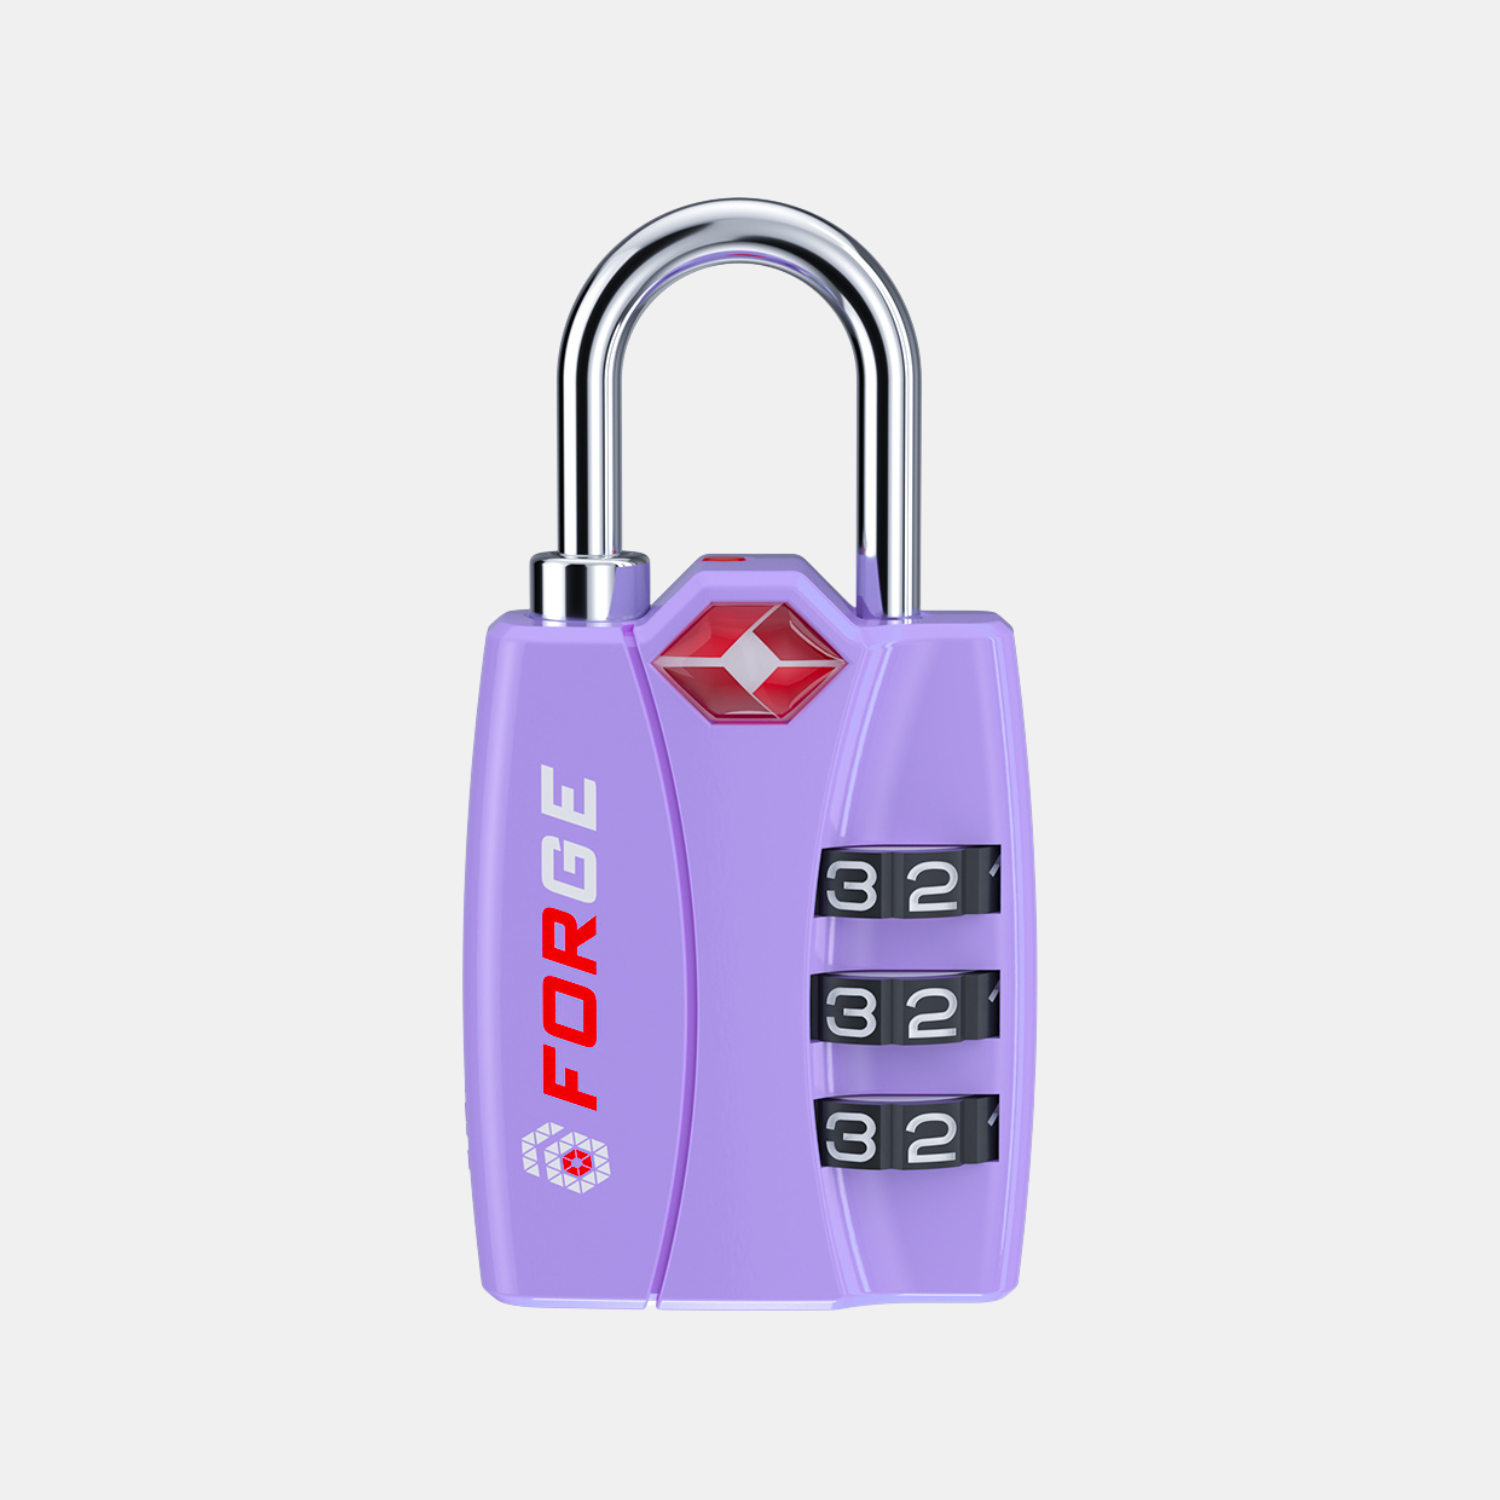 TSA-Approved Luggage Locks: 3-Digit Combination, Open Alert Indicator, Light Purple 2 Locks